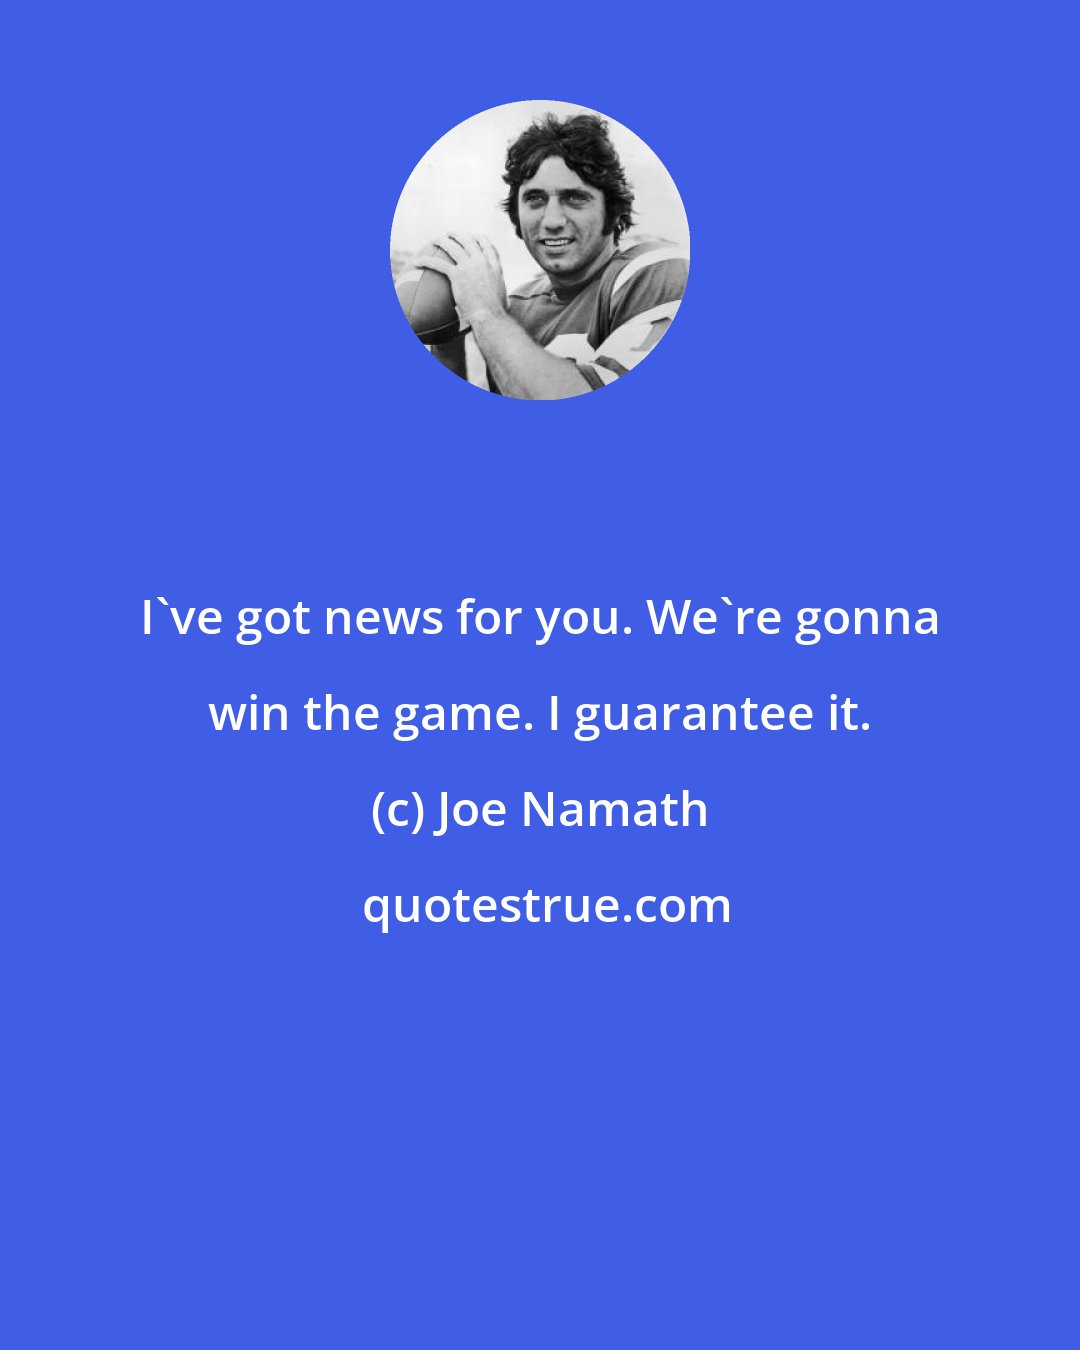 Joe Namath: I've got news for you. We're gonna win the game. I guarantee it.